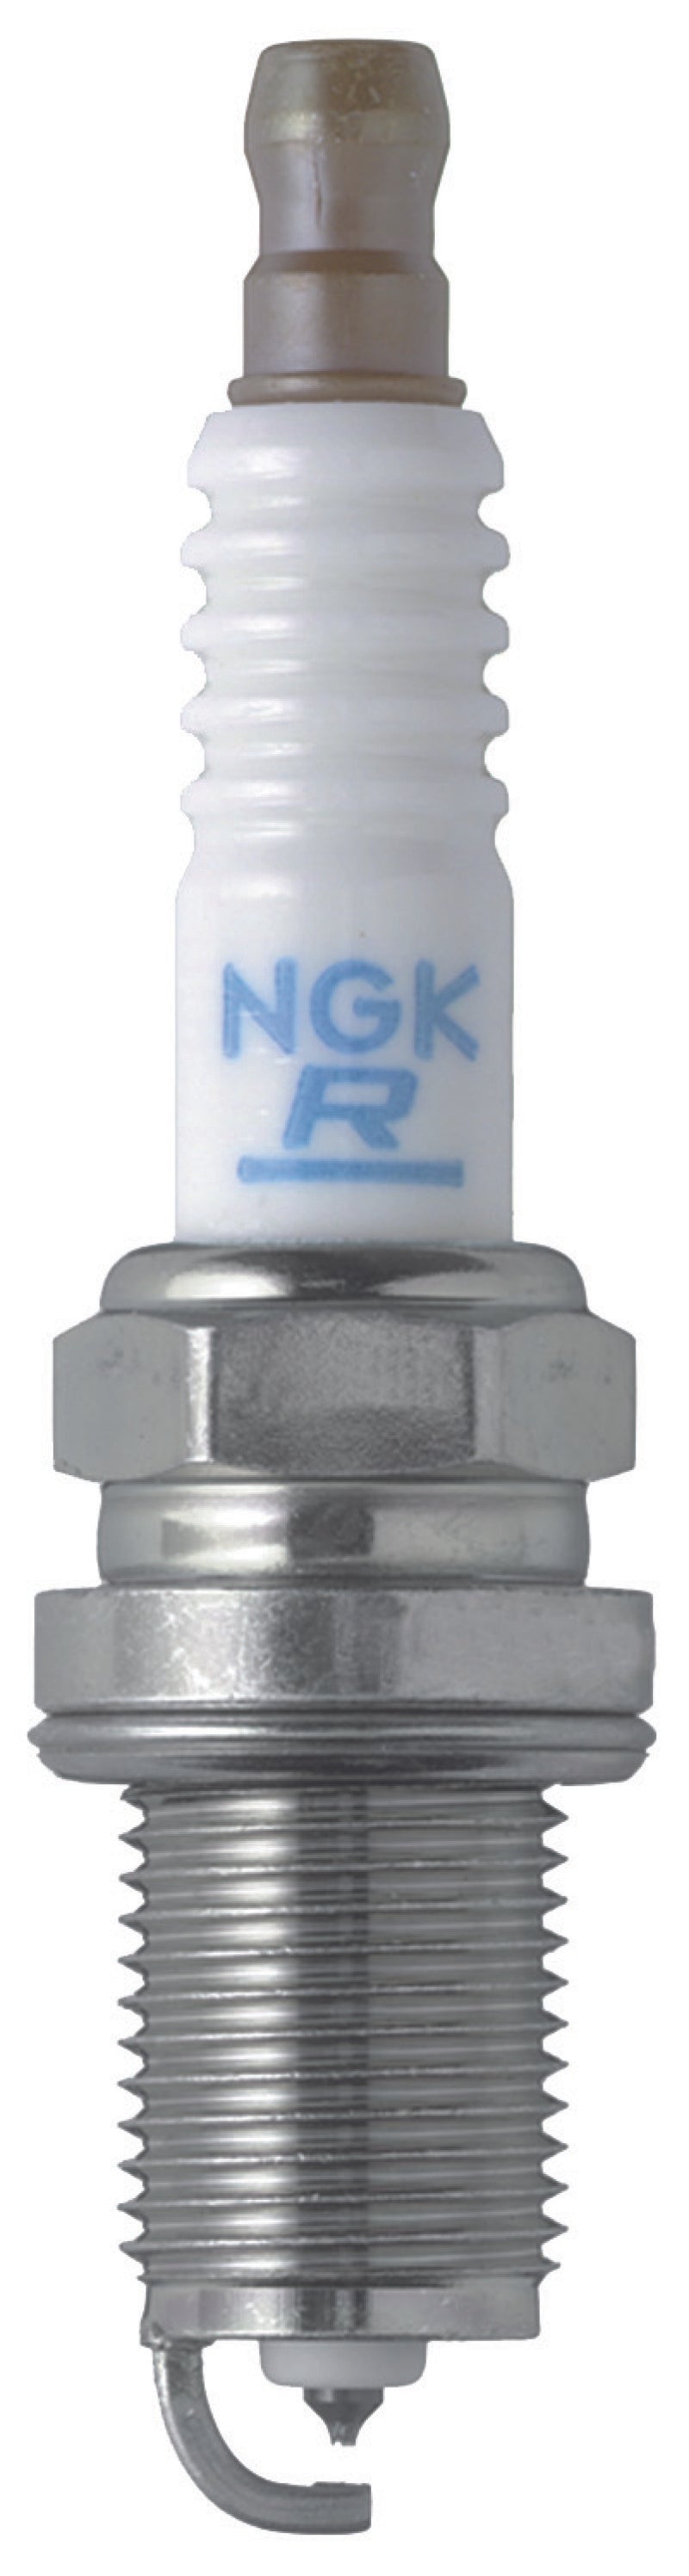 NGK Laser Platinum Spark Plug Box of 4 (PFR7Q).